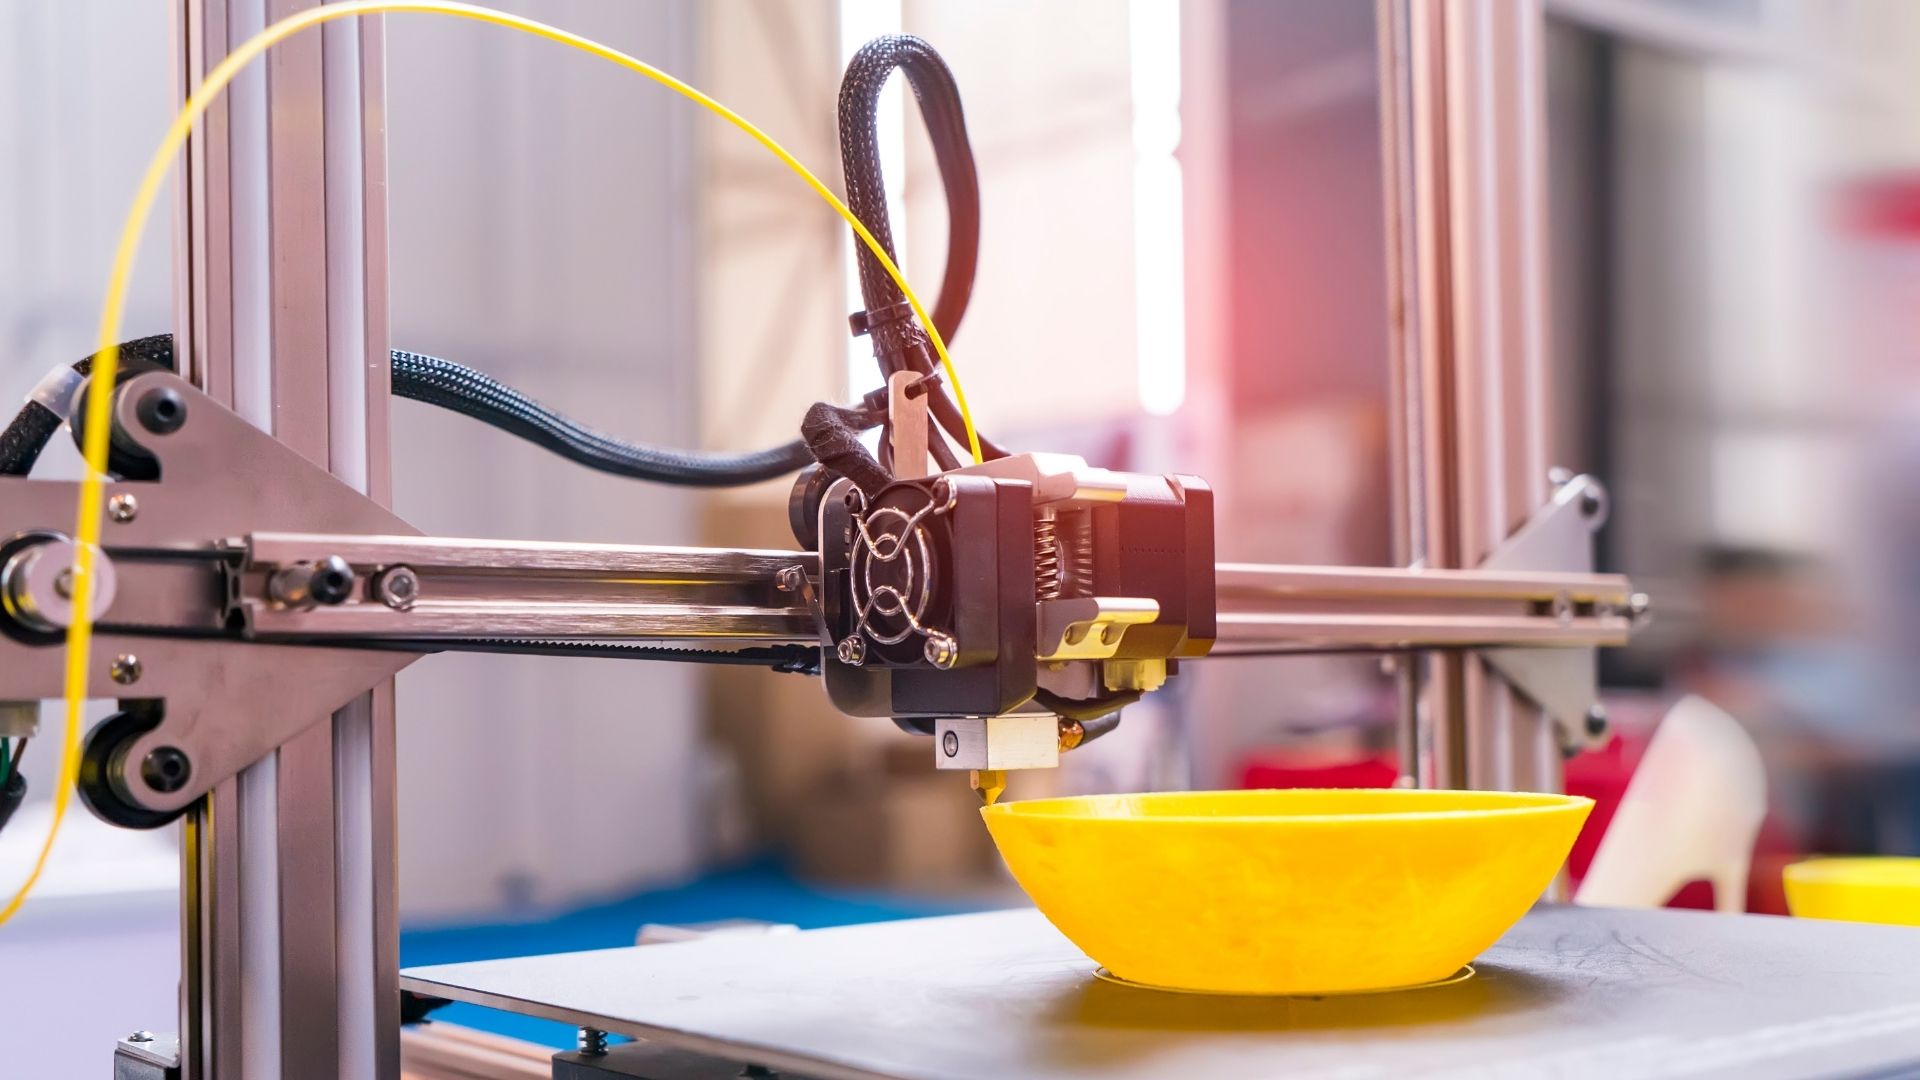 Surprising Facts About PETG 3D Printing Filament